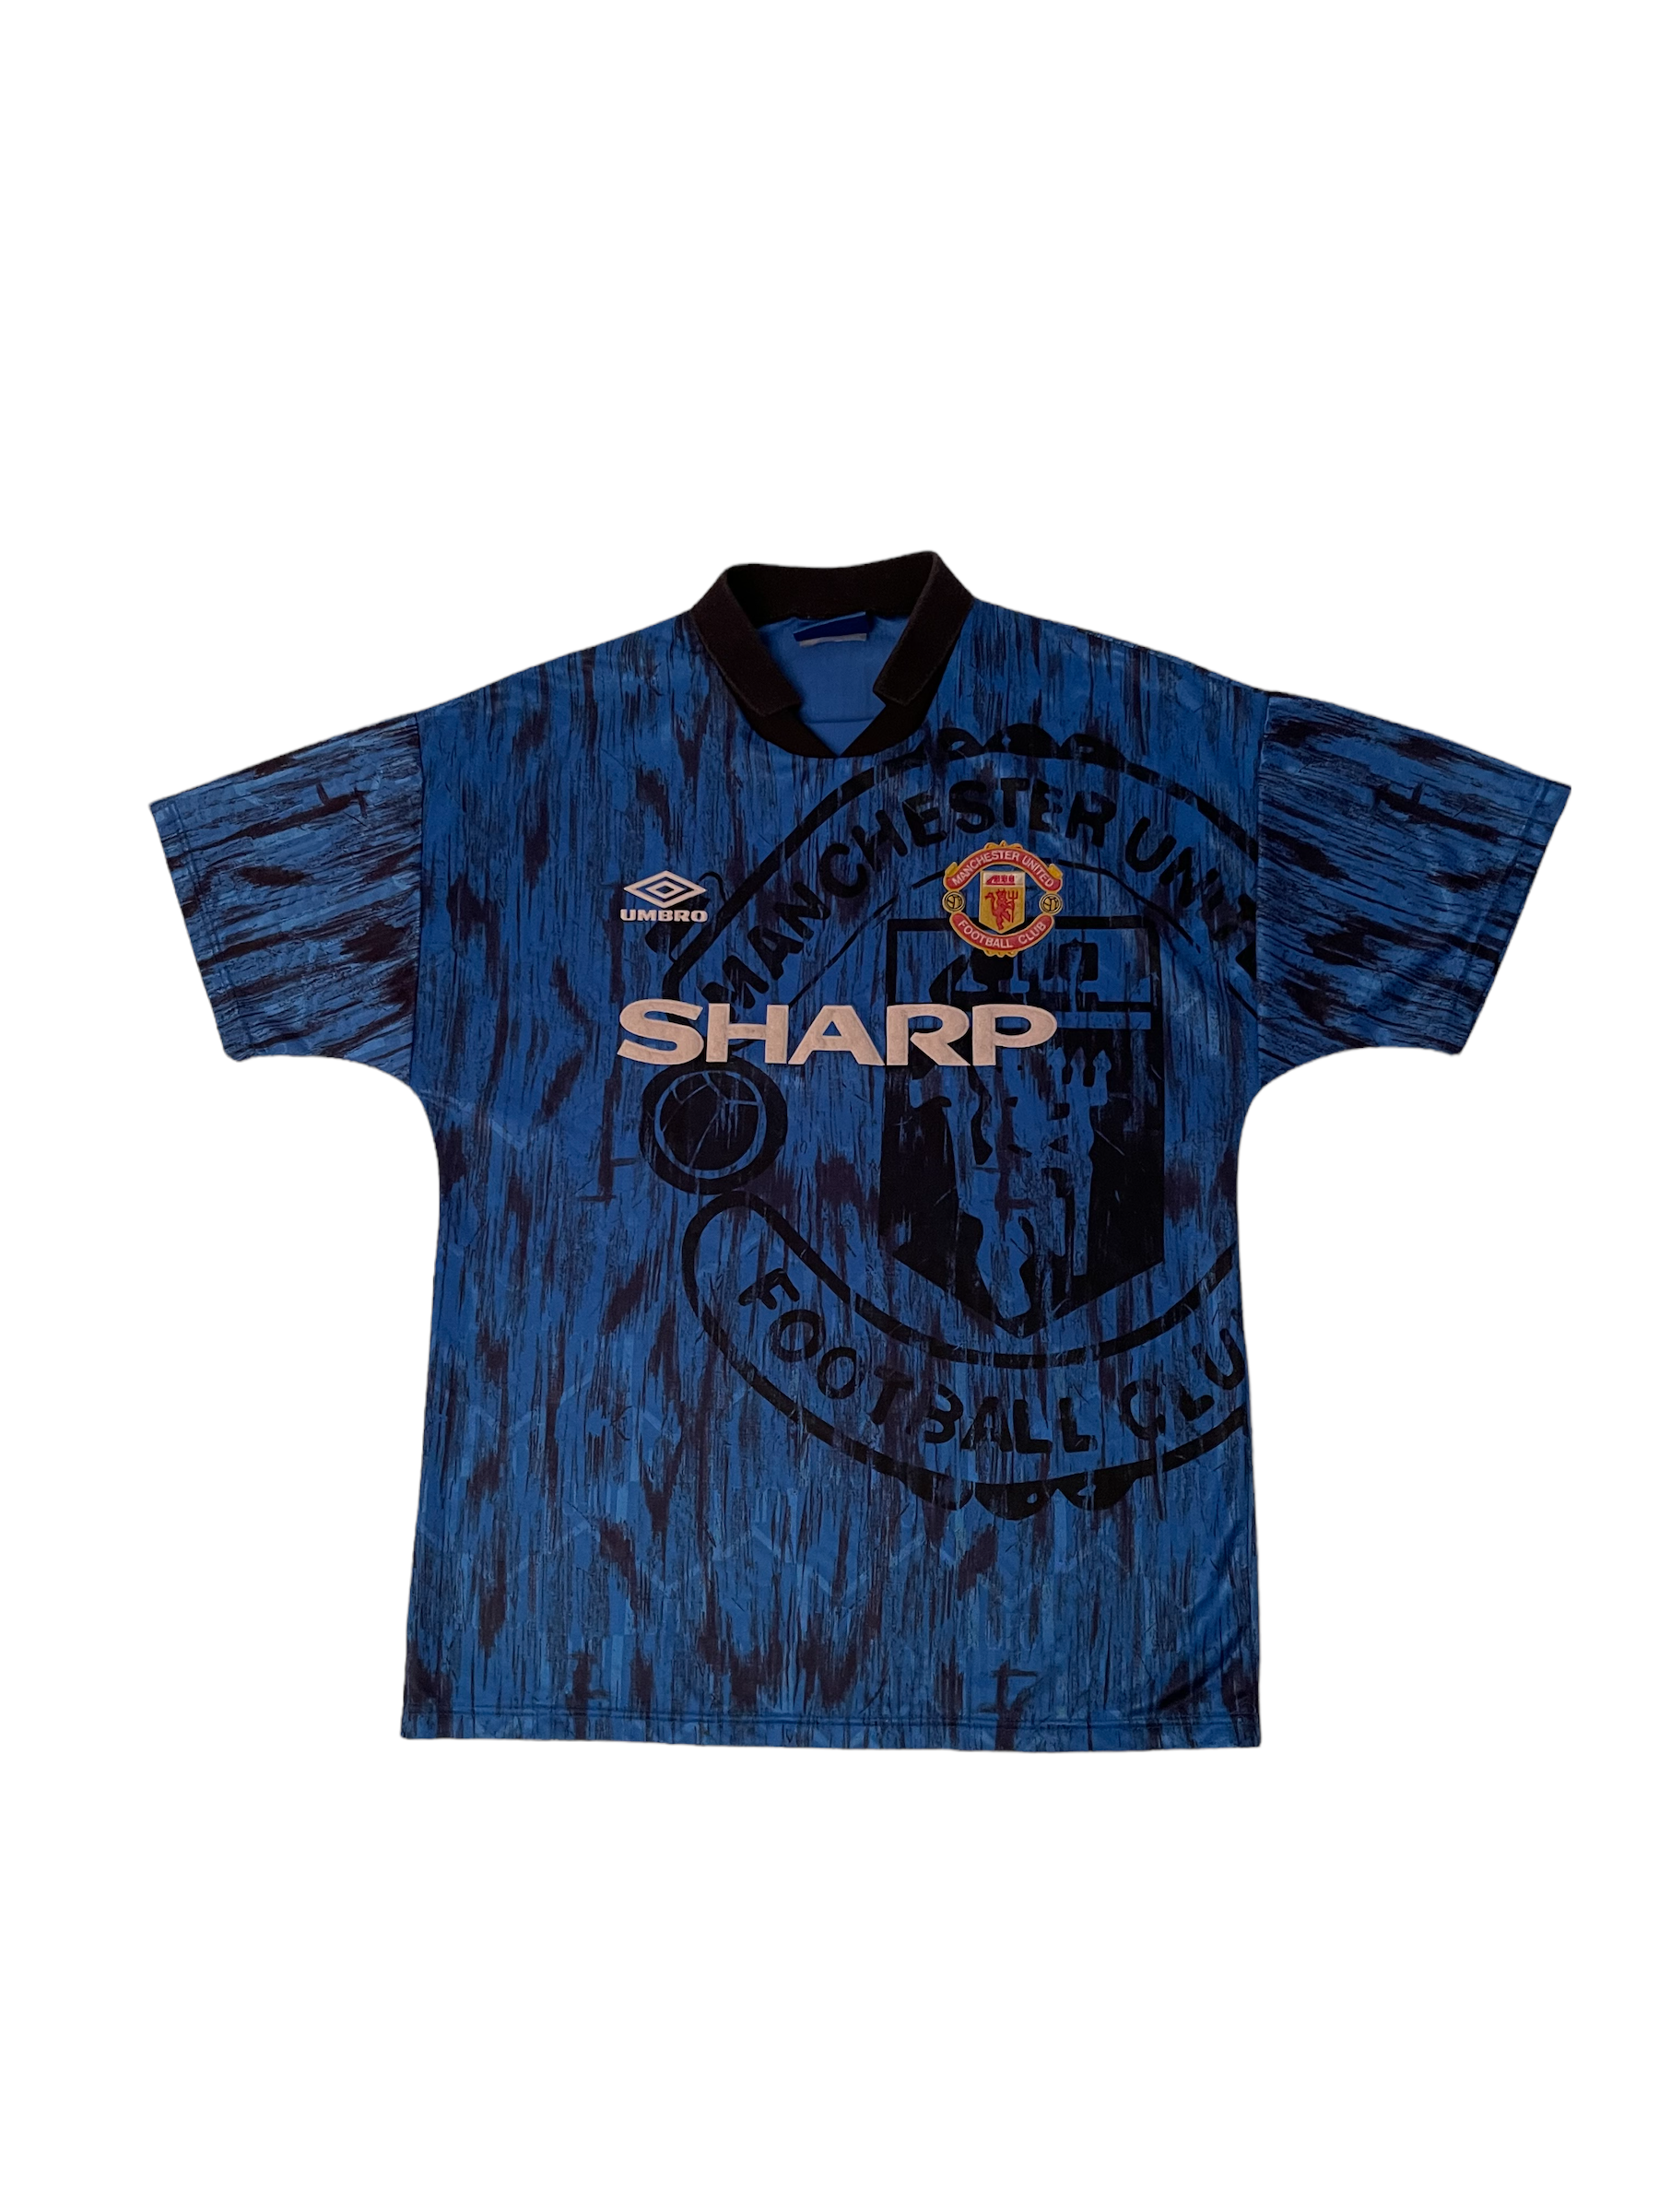 Vintage Manchester United Umbro Away Football Shirt 1992-1993 Blue Size M Sharp